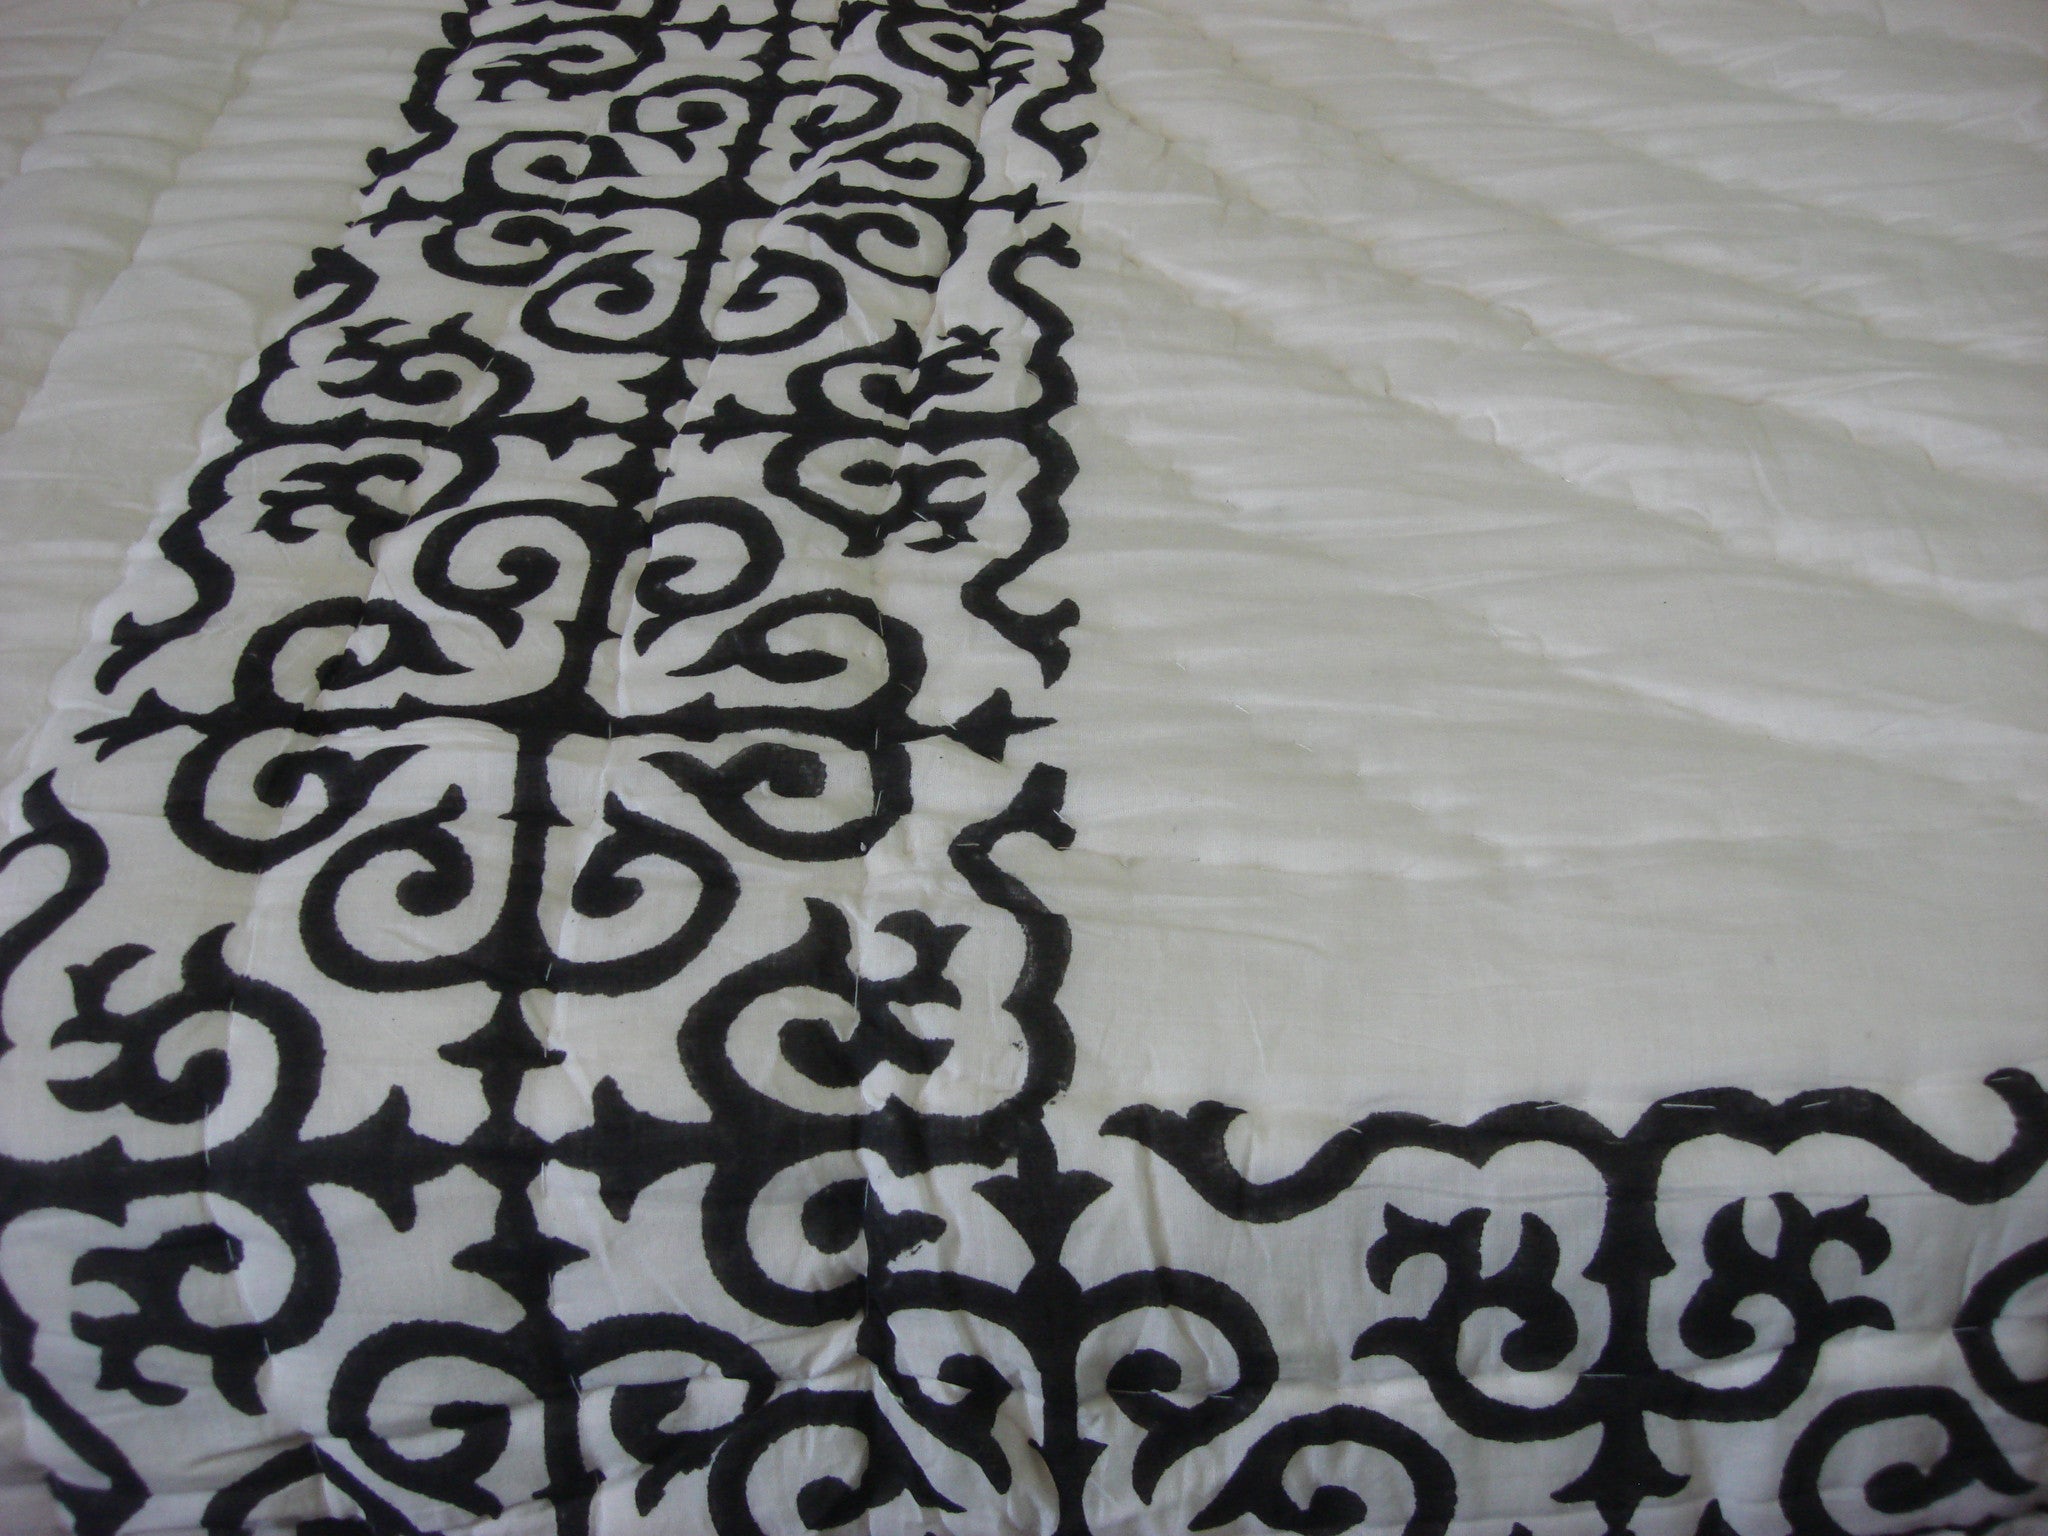 QBP 172 -100% Handmade Cotton Queen Quilt - Black on White design - Pentagon Crafts